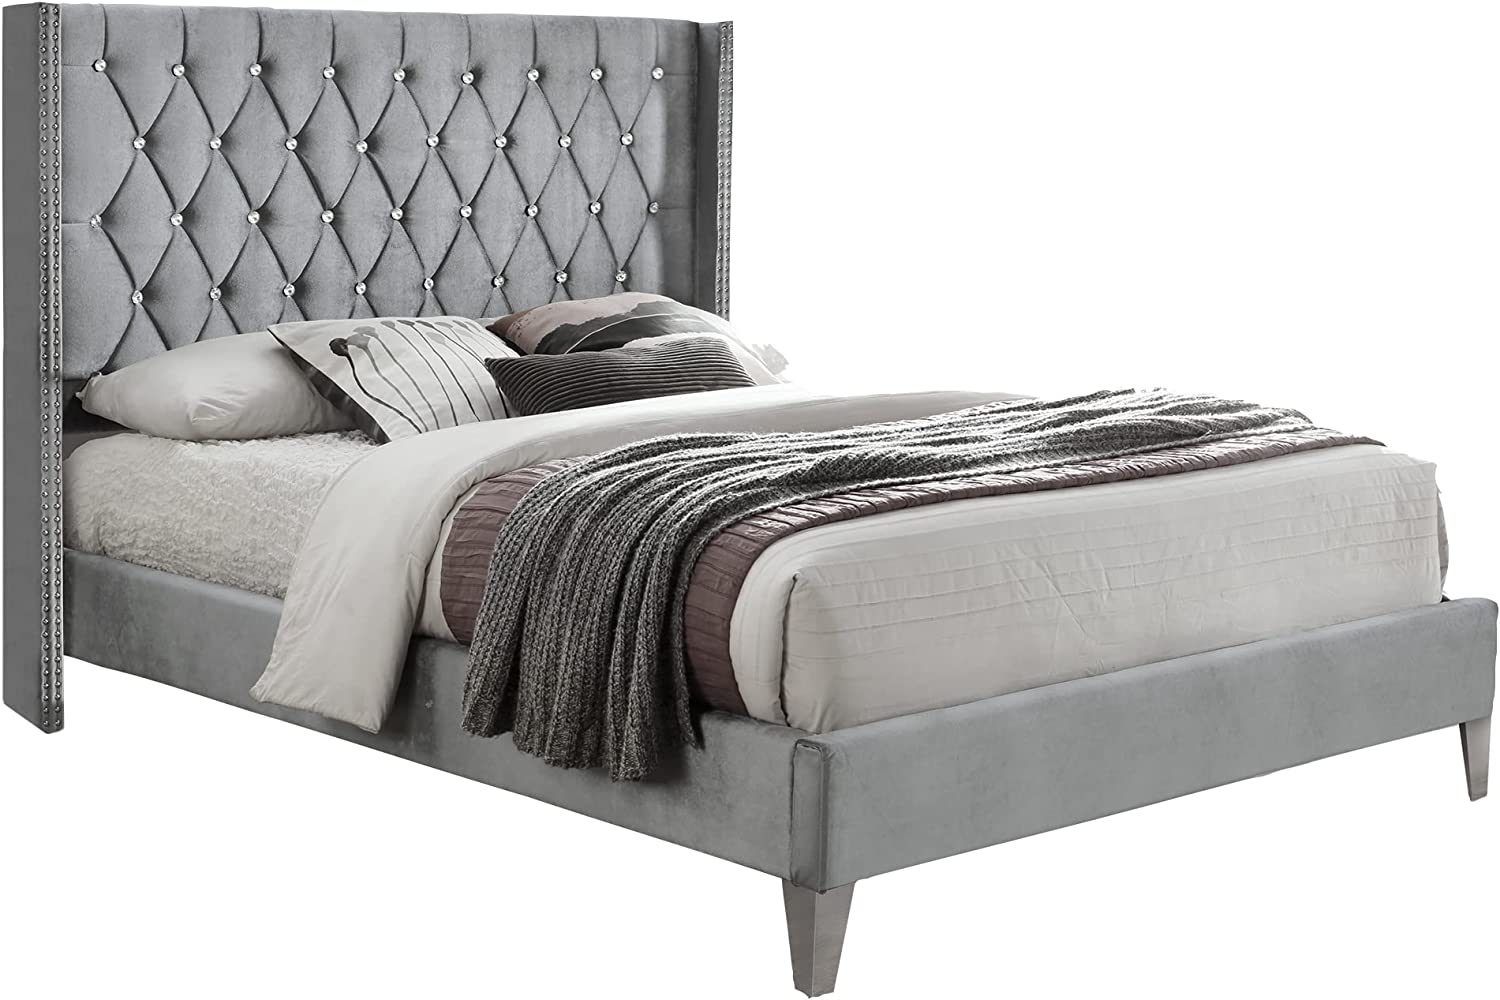 Better Home Products Alexa Velvet Upholstered Queen Platform Bed in Gray